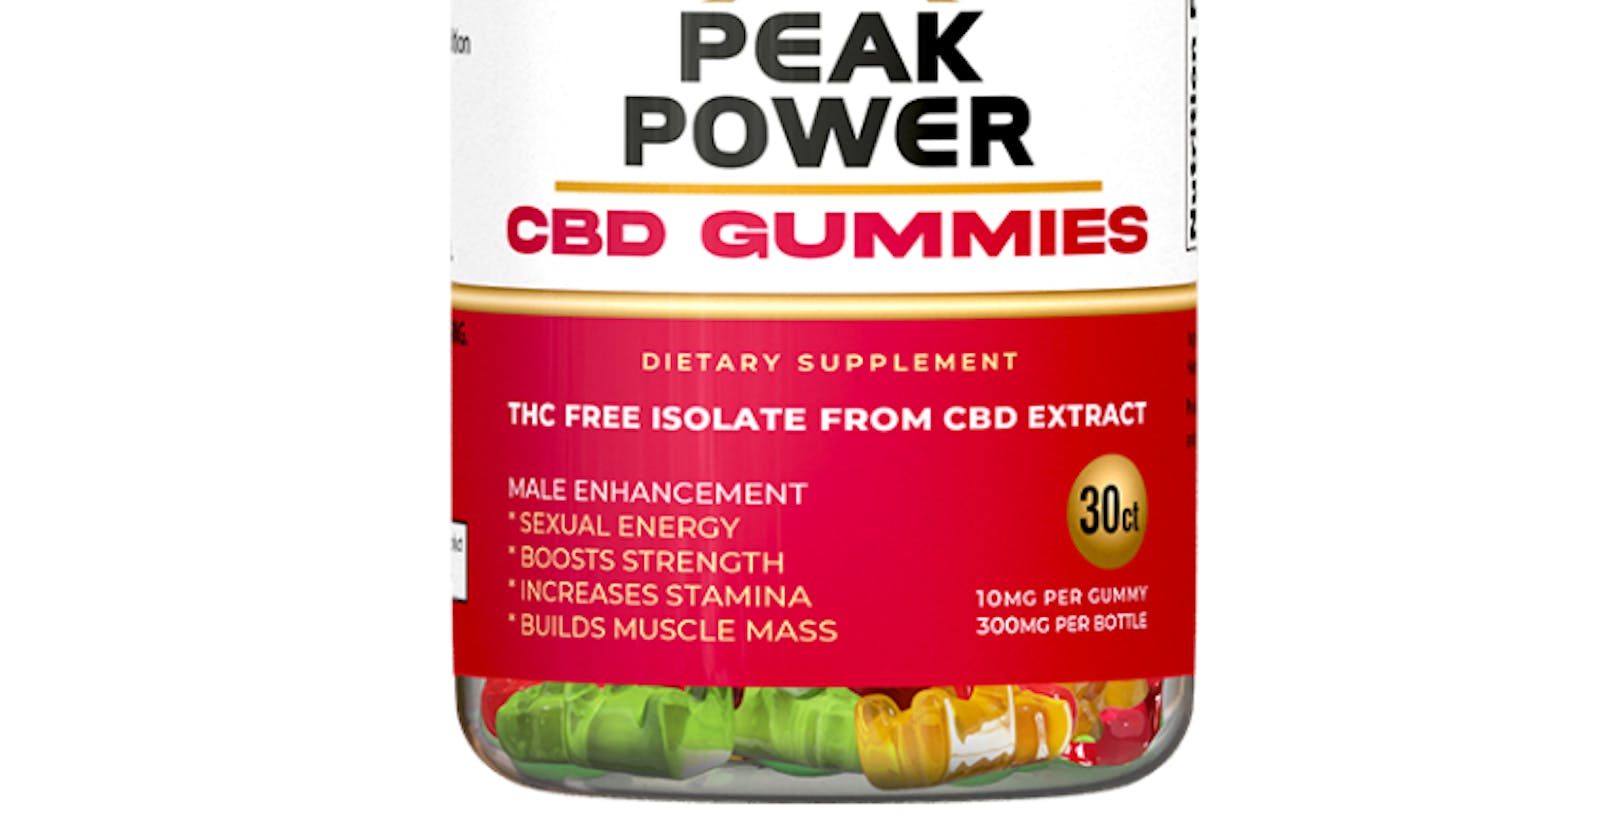 Peak Power CBD Gummies for Overall Wellness